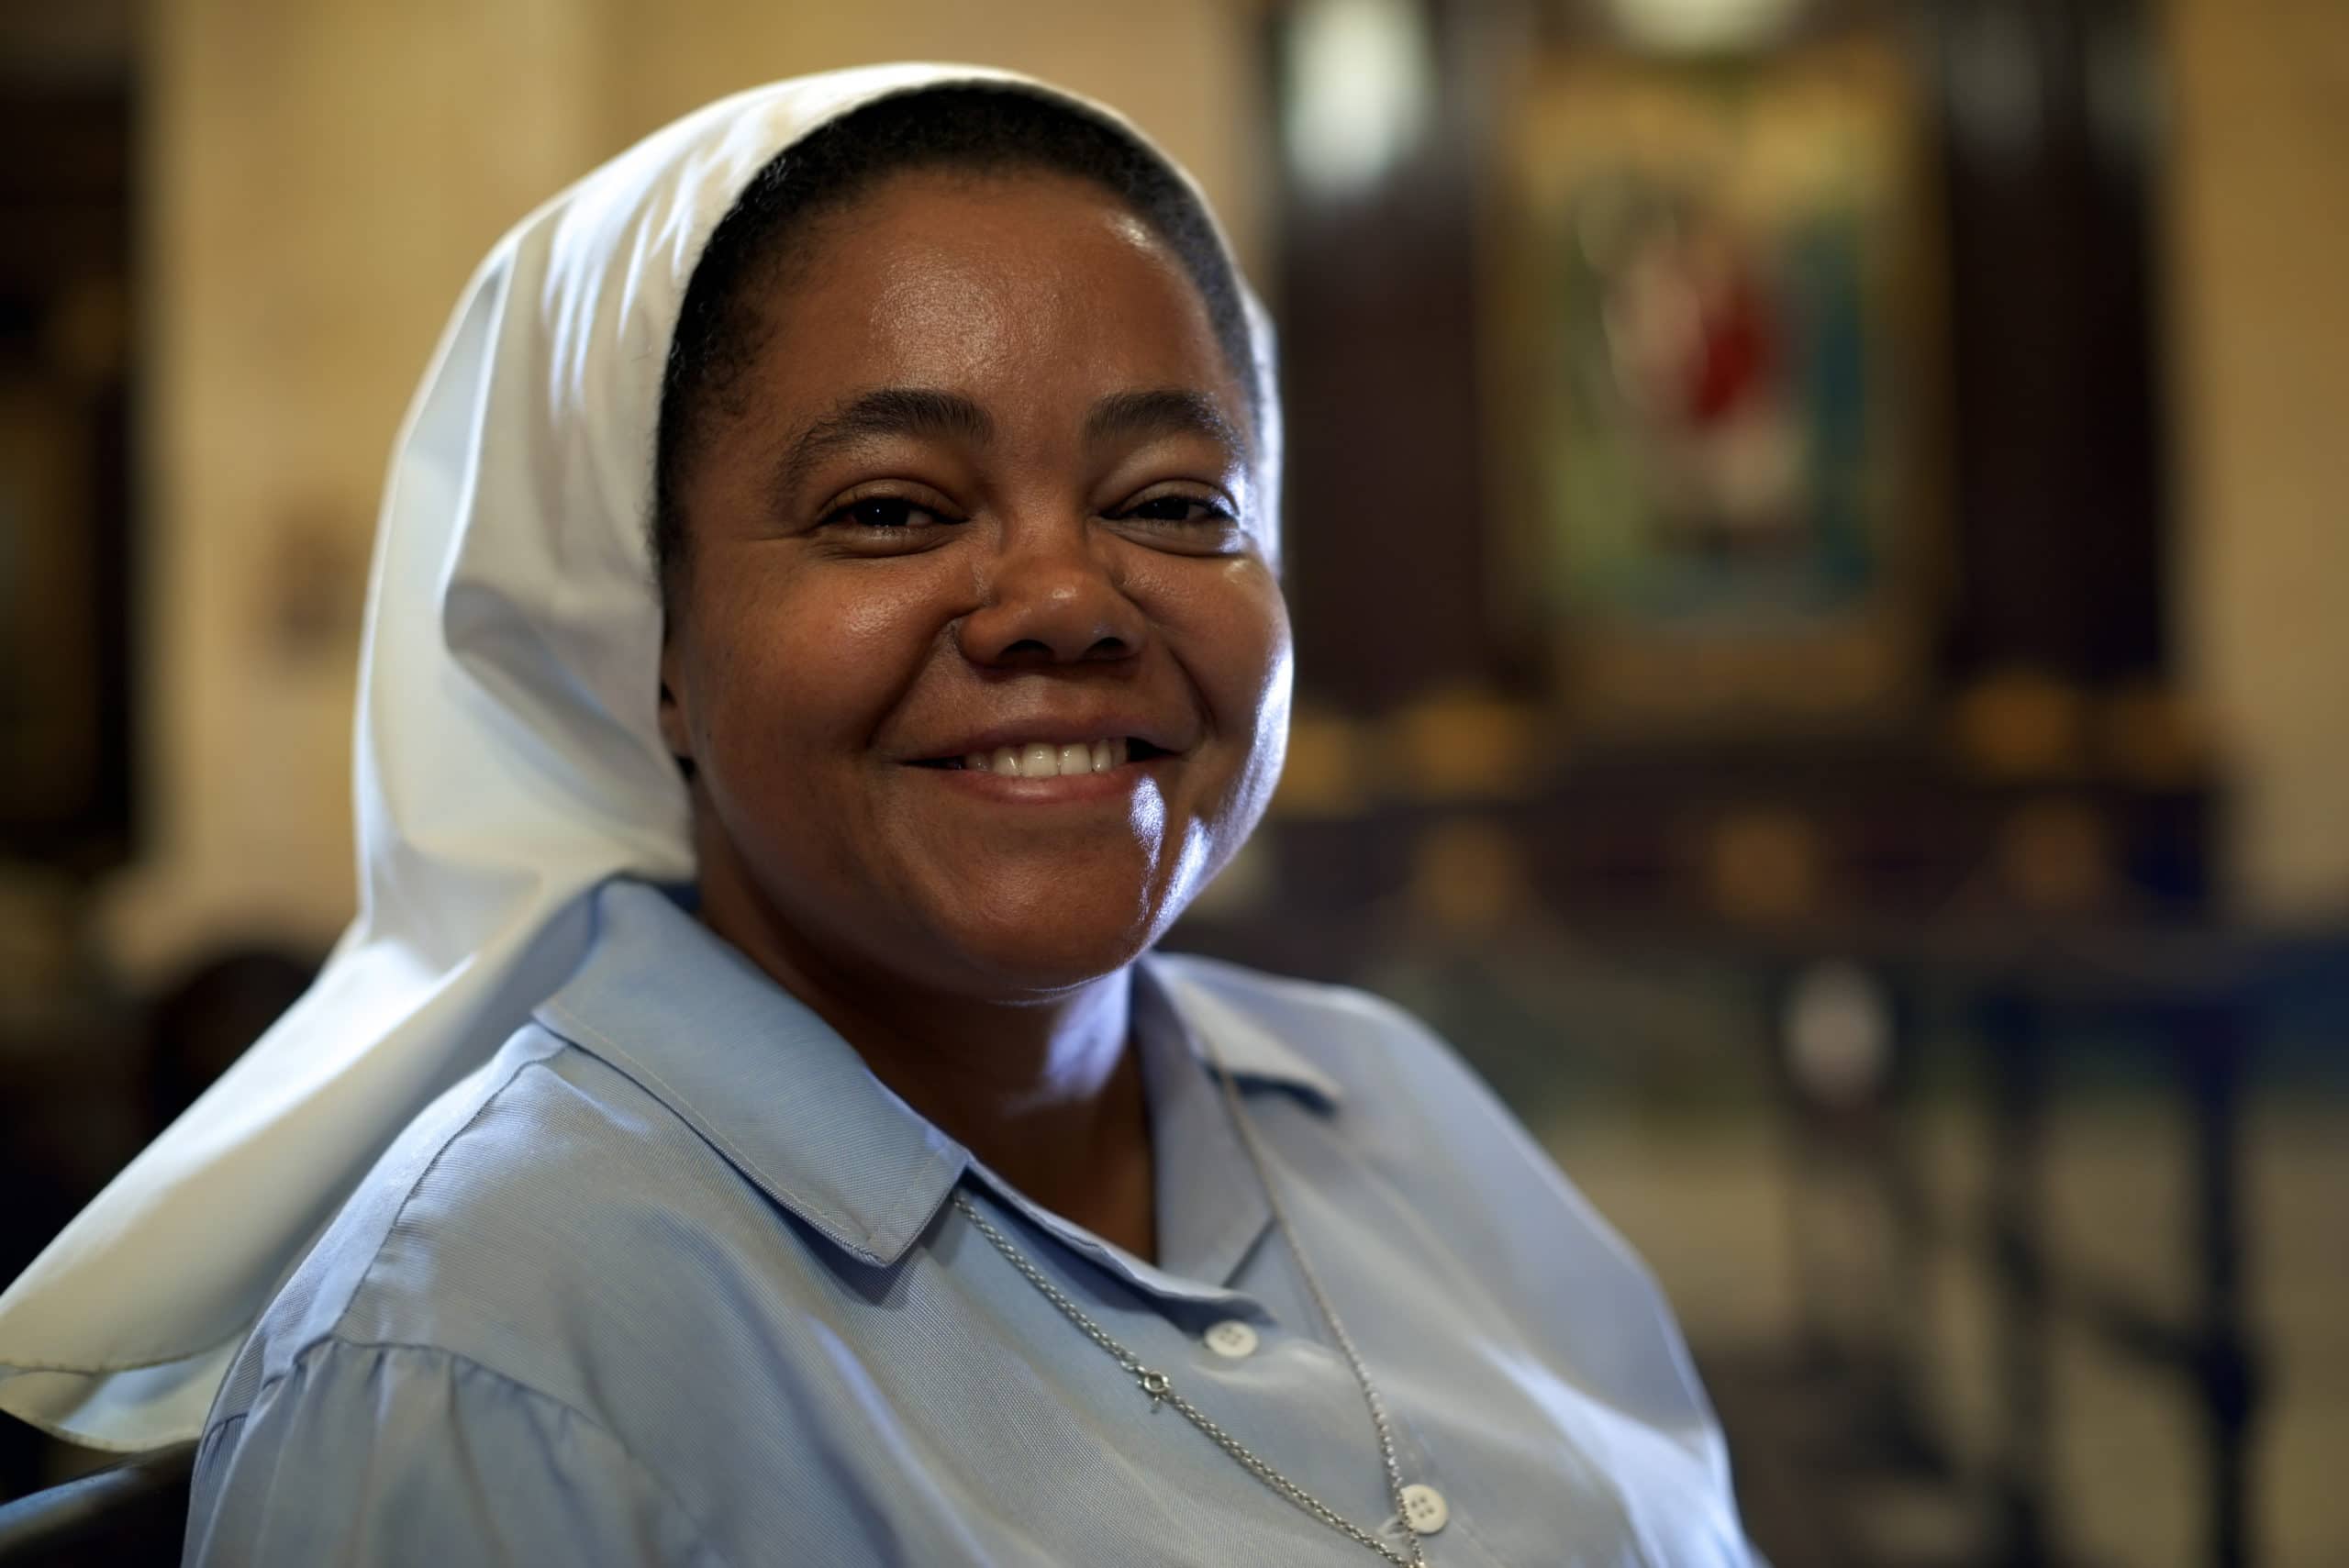 Religious sister, portrait of catholic nun in church